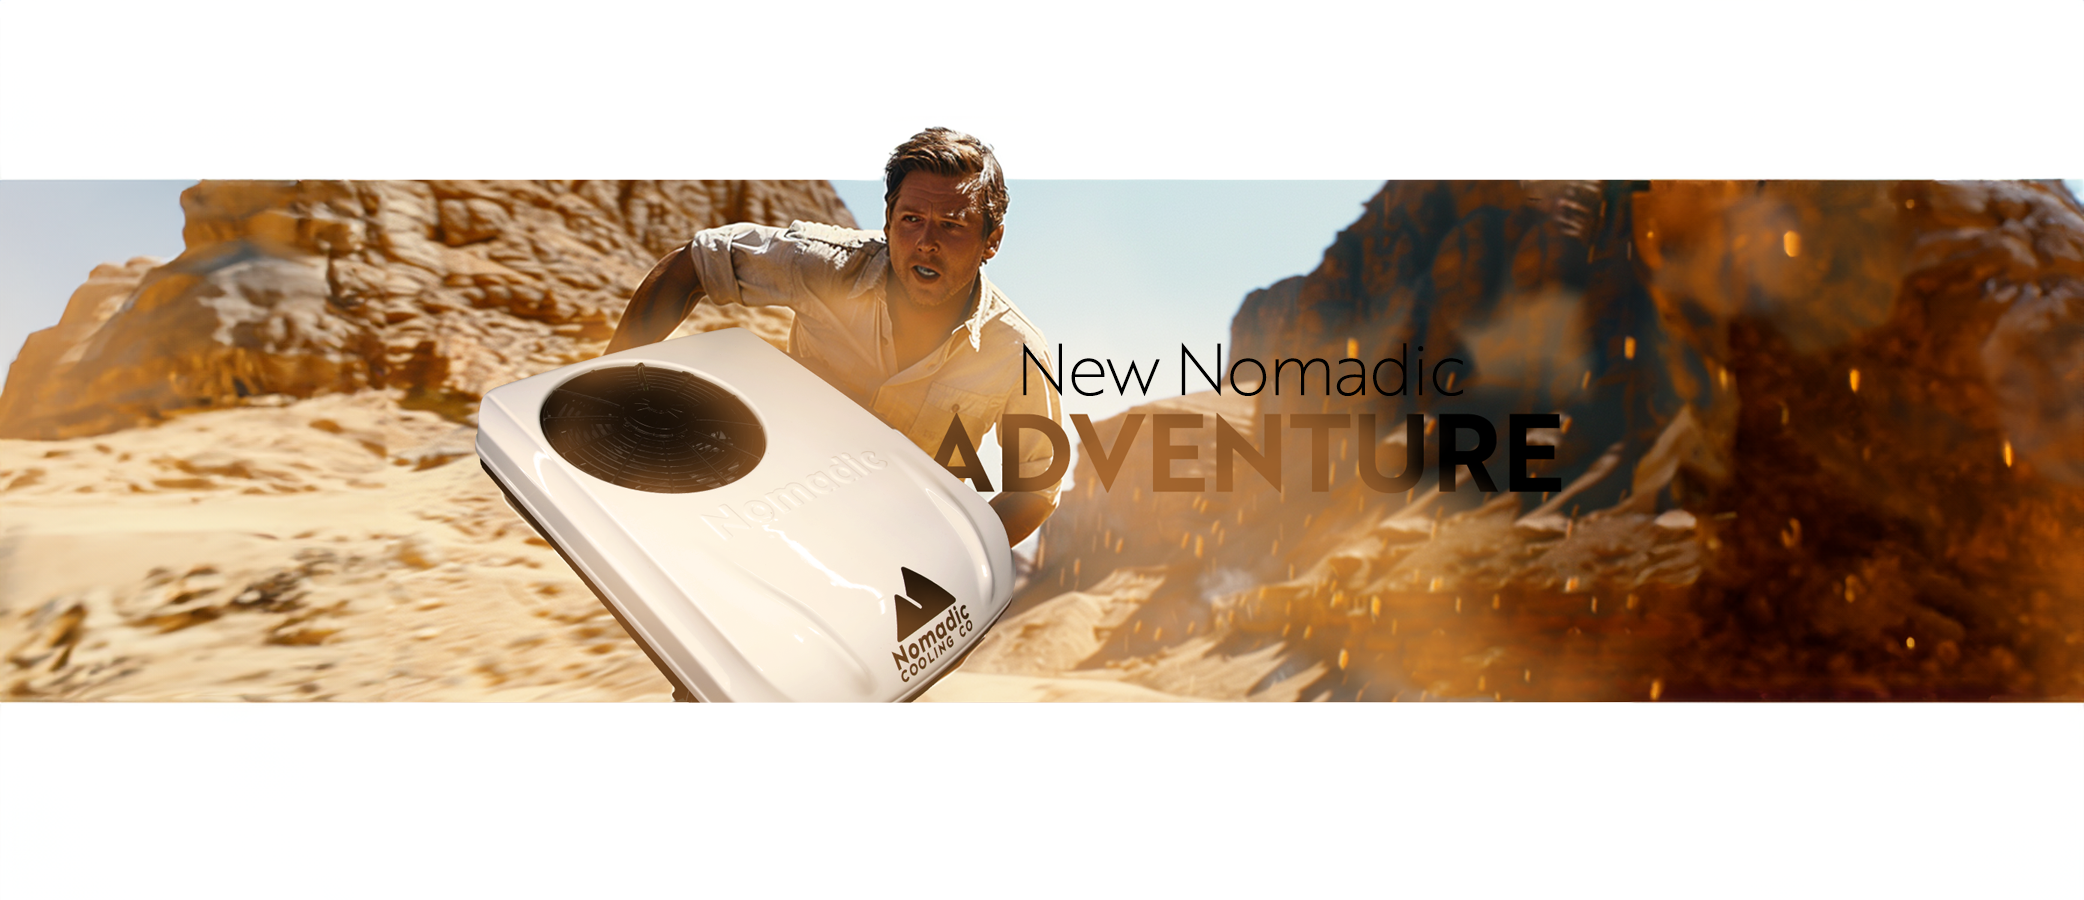 Nomadic Innovations: A New Era of Adventure